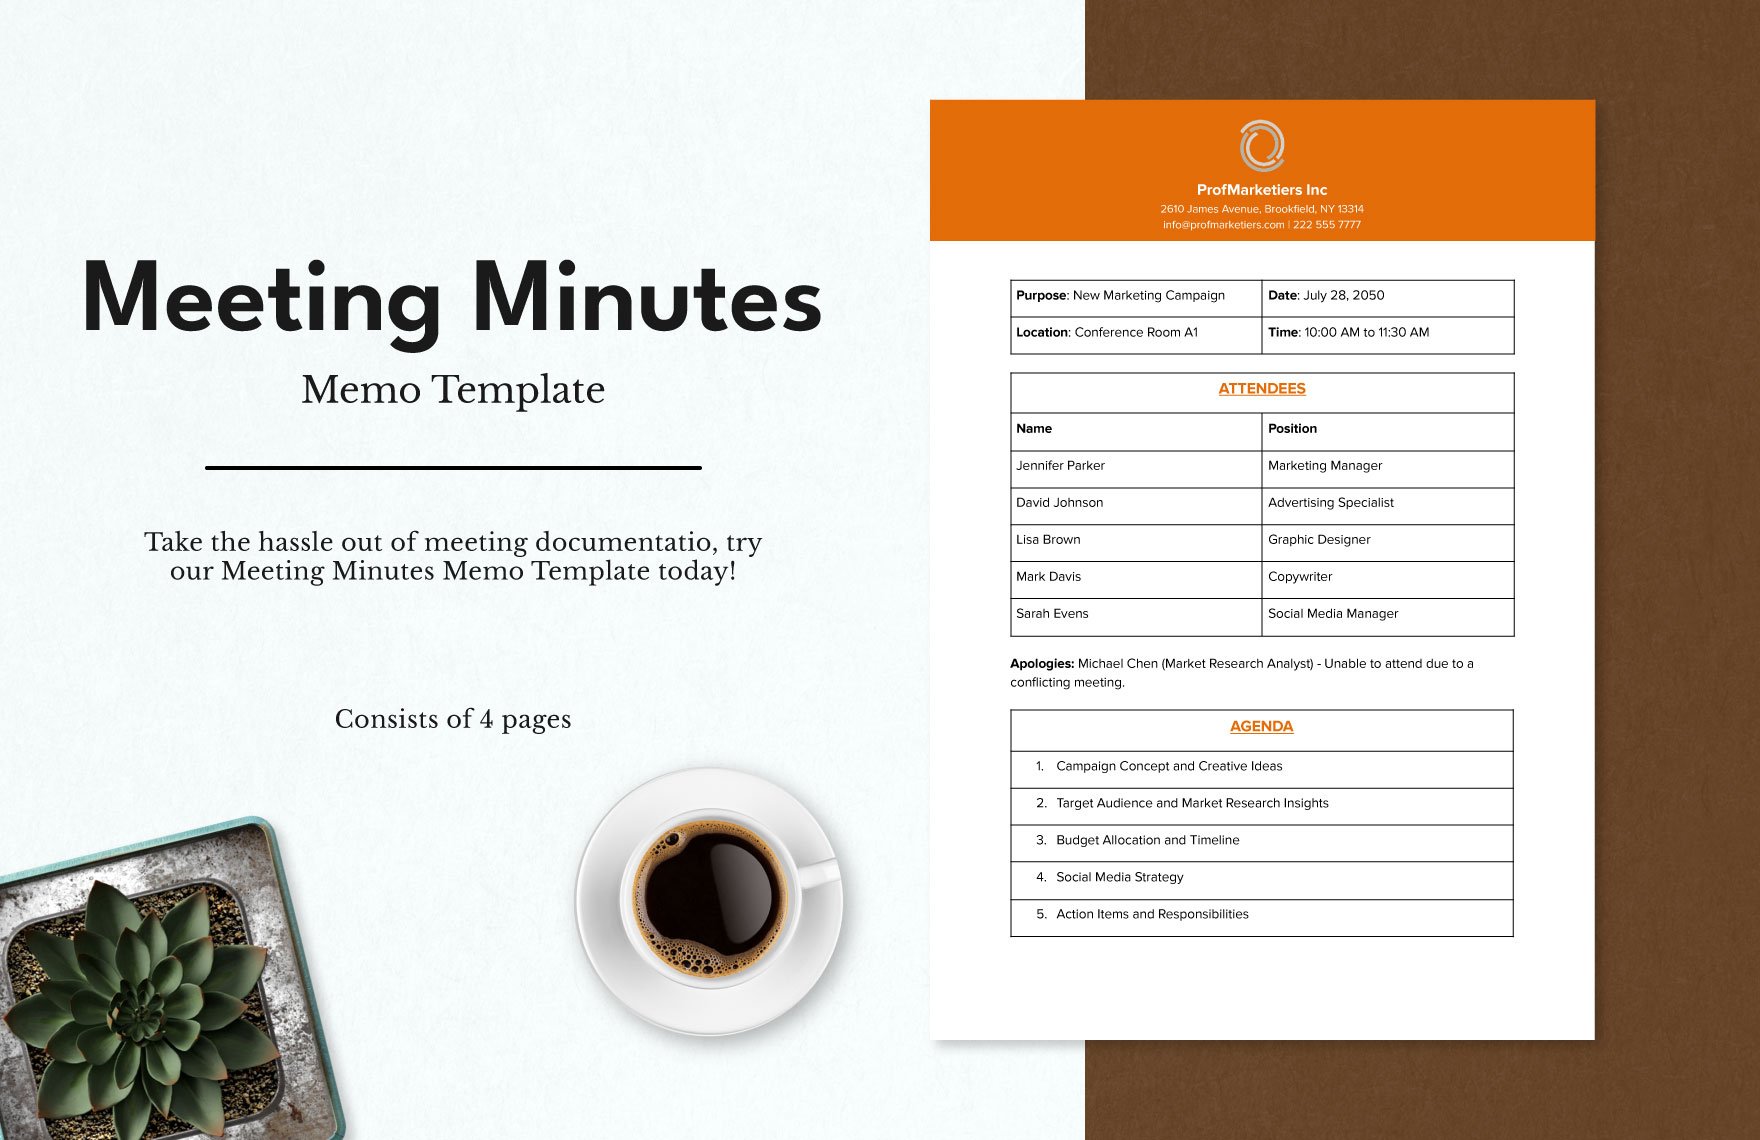 Meeting Minutes Memo Template